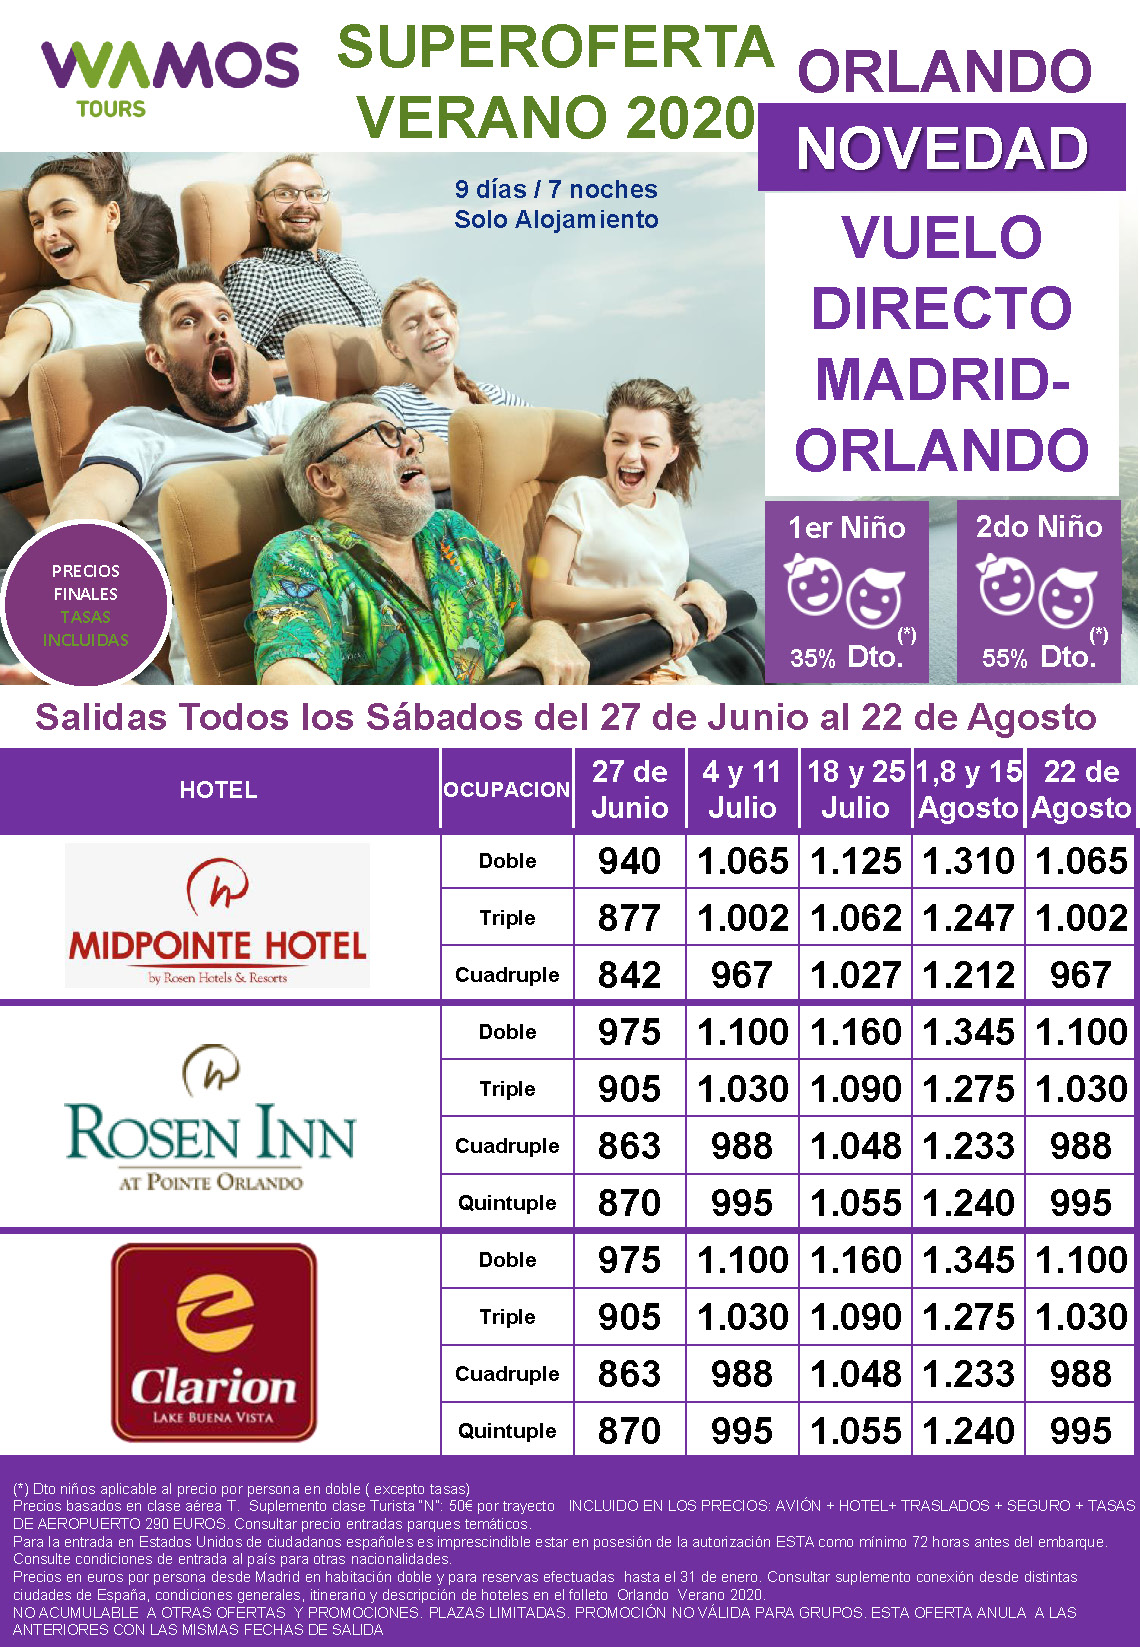 Superoferta Wamos Tours Orlando Verano 2020 Vuelo directo desde Madrid